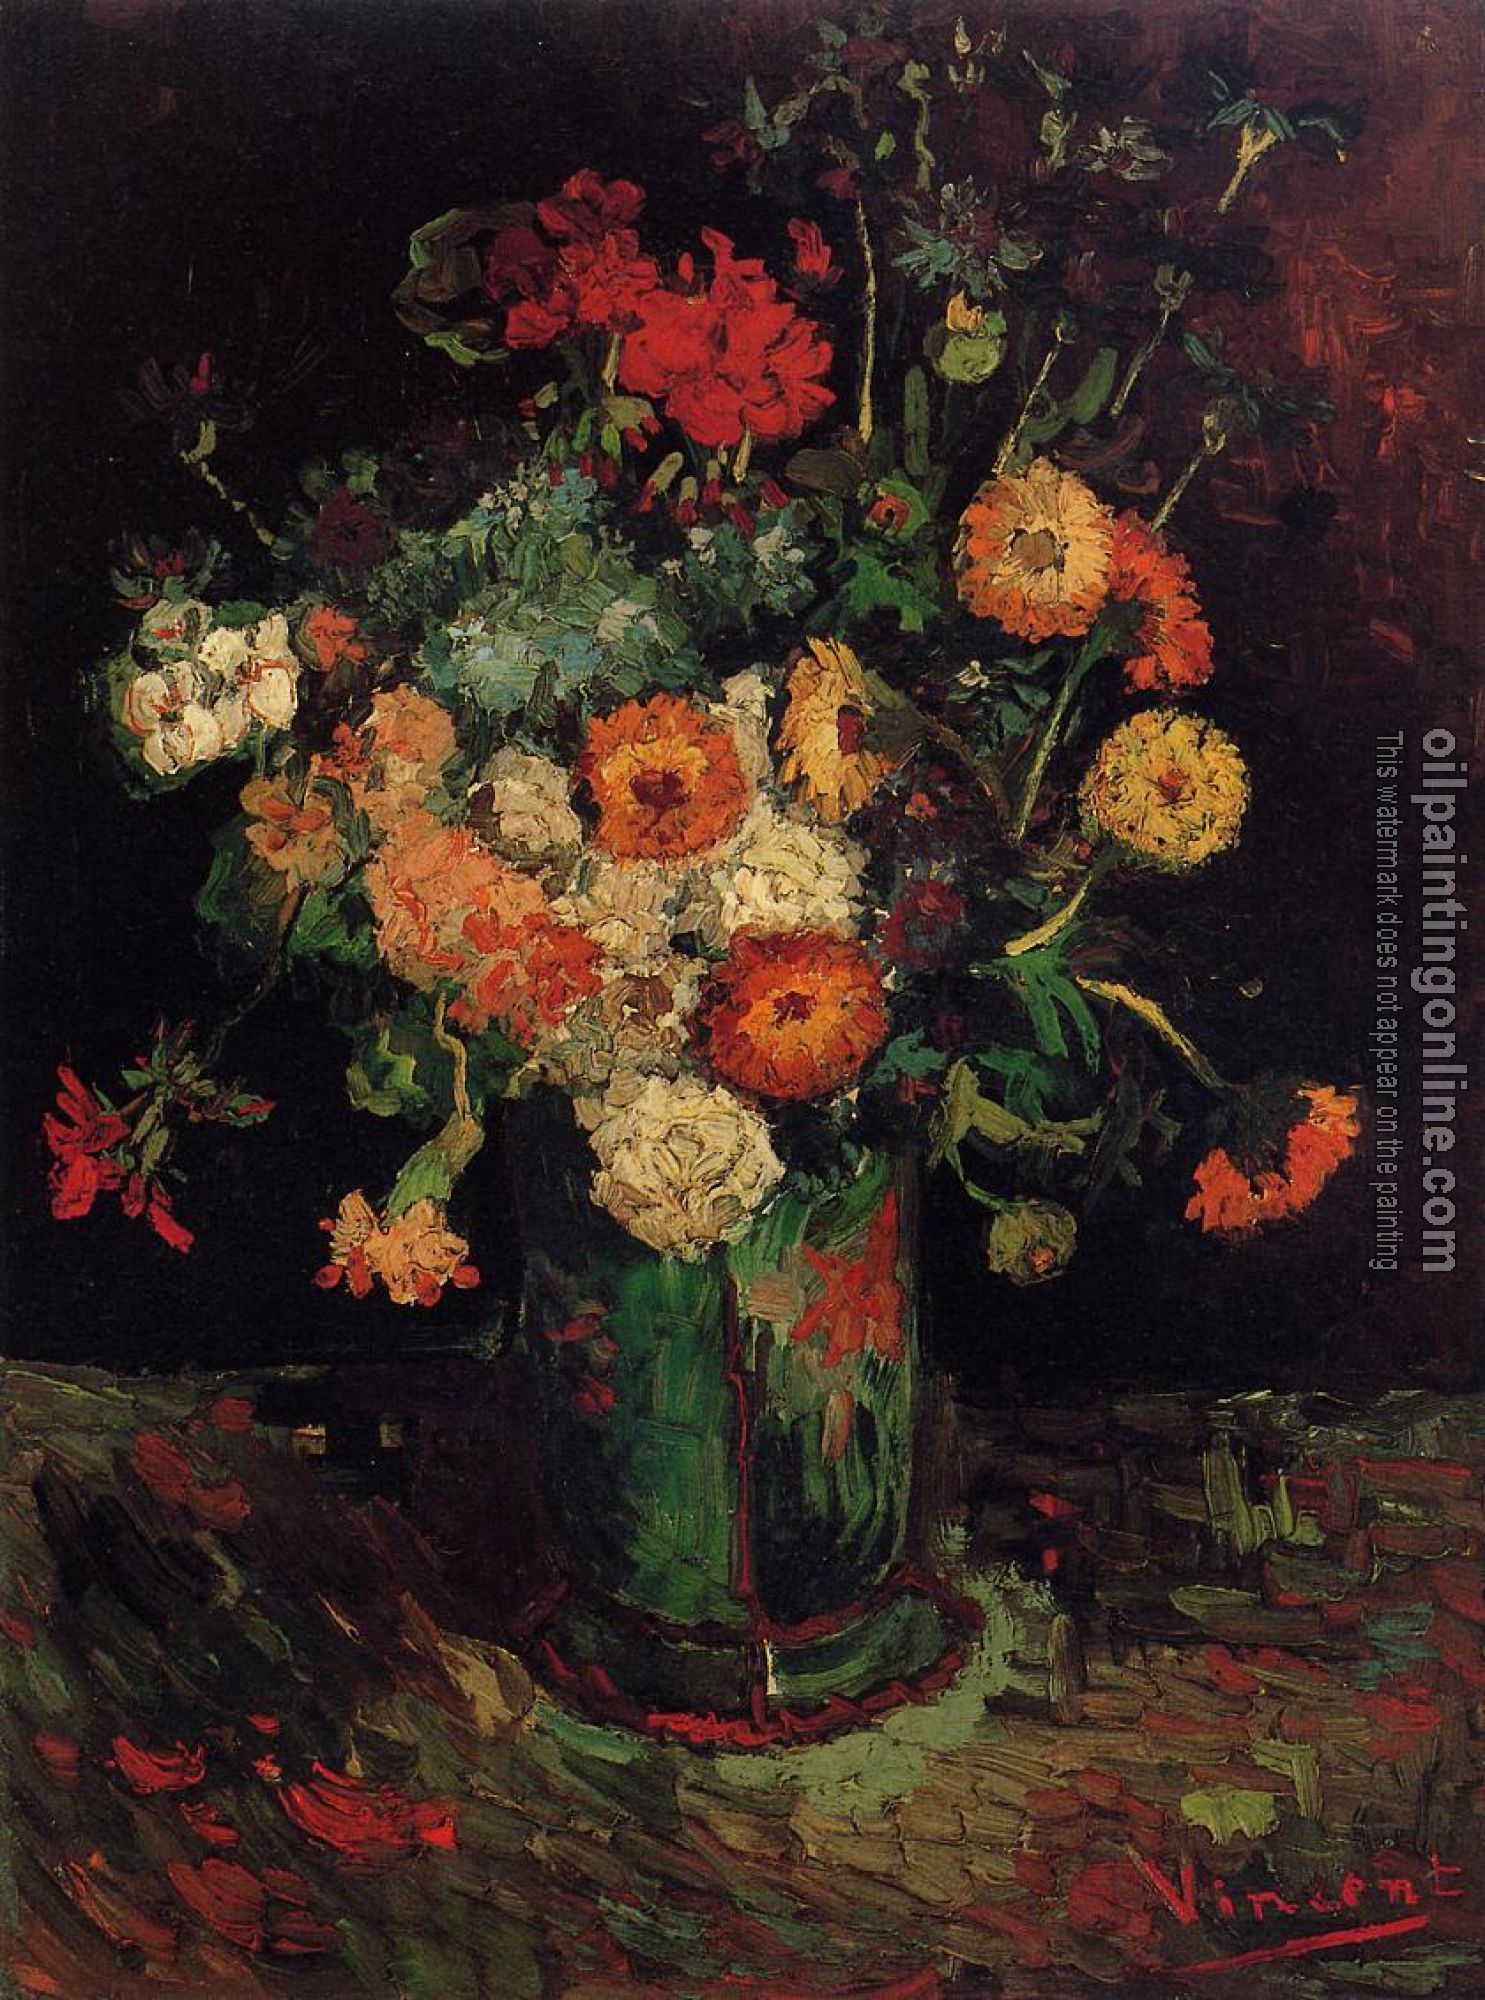 Gogh, Vincent van - Vase with Zinnias and Geraniums